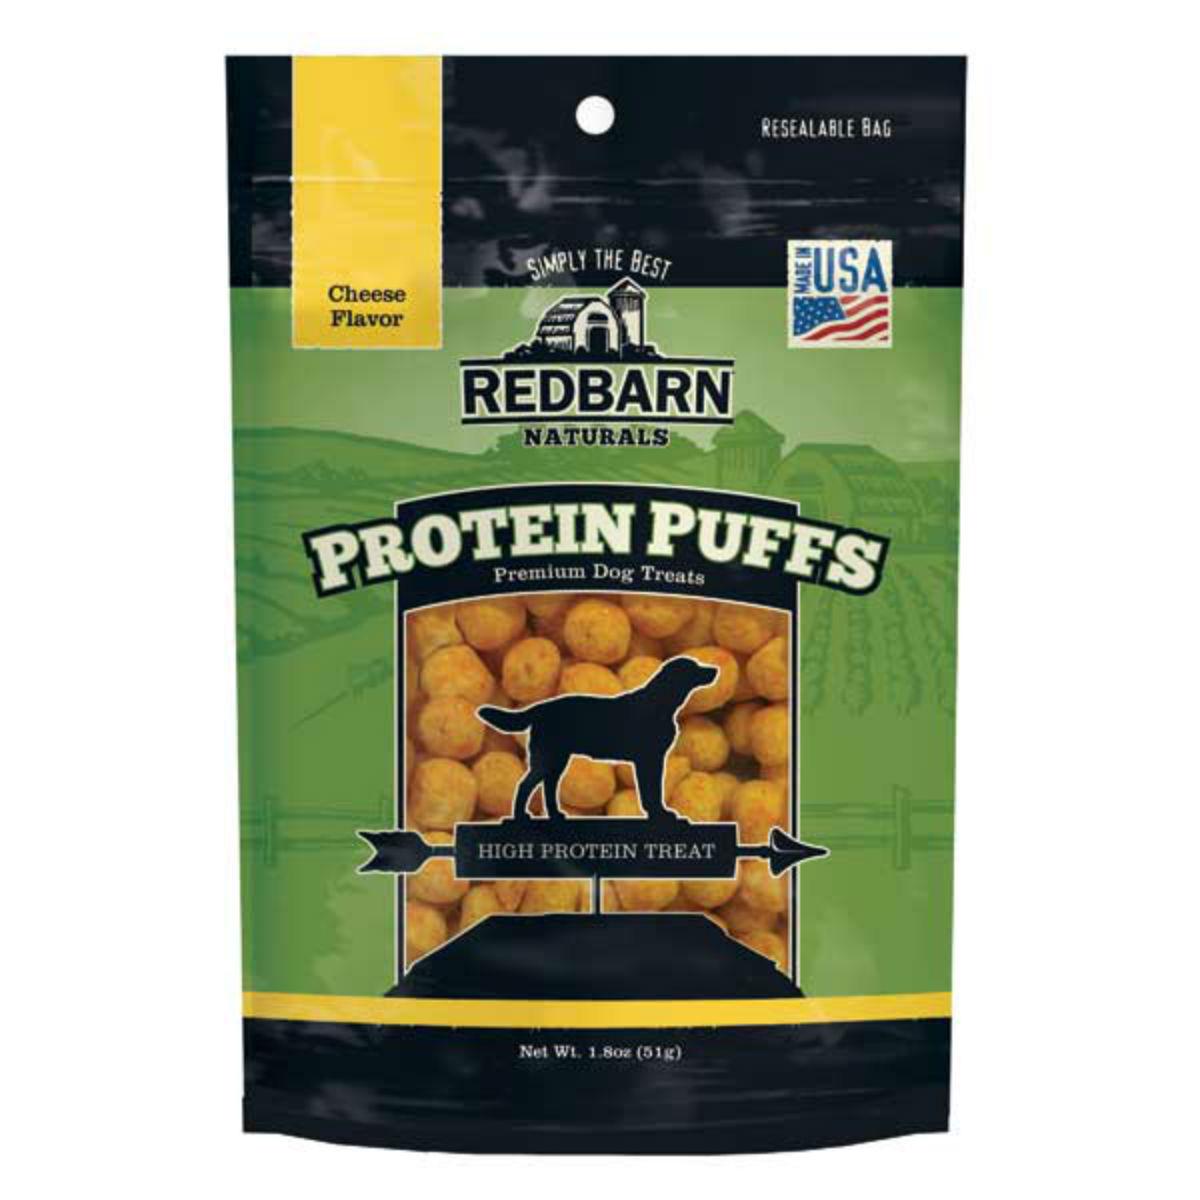 Redbarn Protein Puffs Dog Treats - Cheese